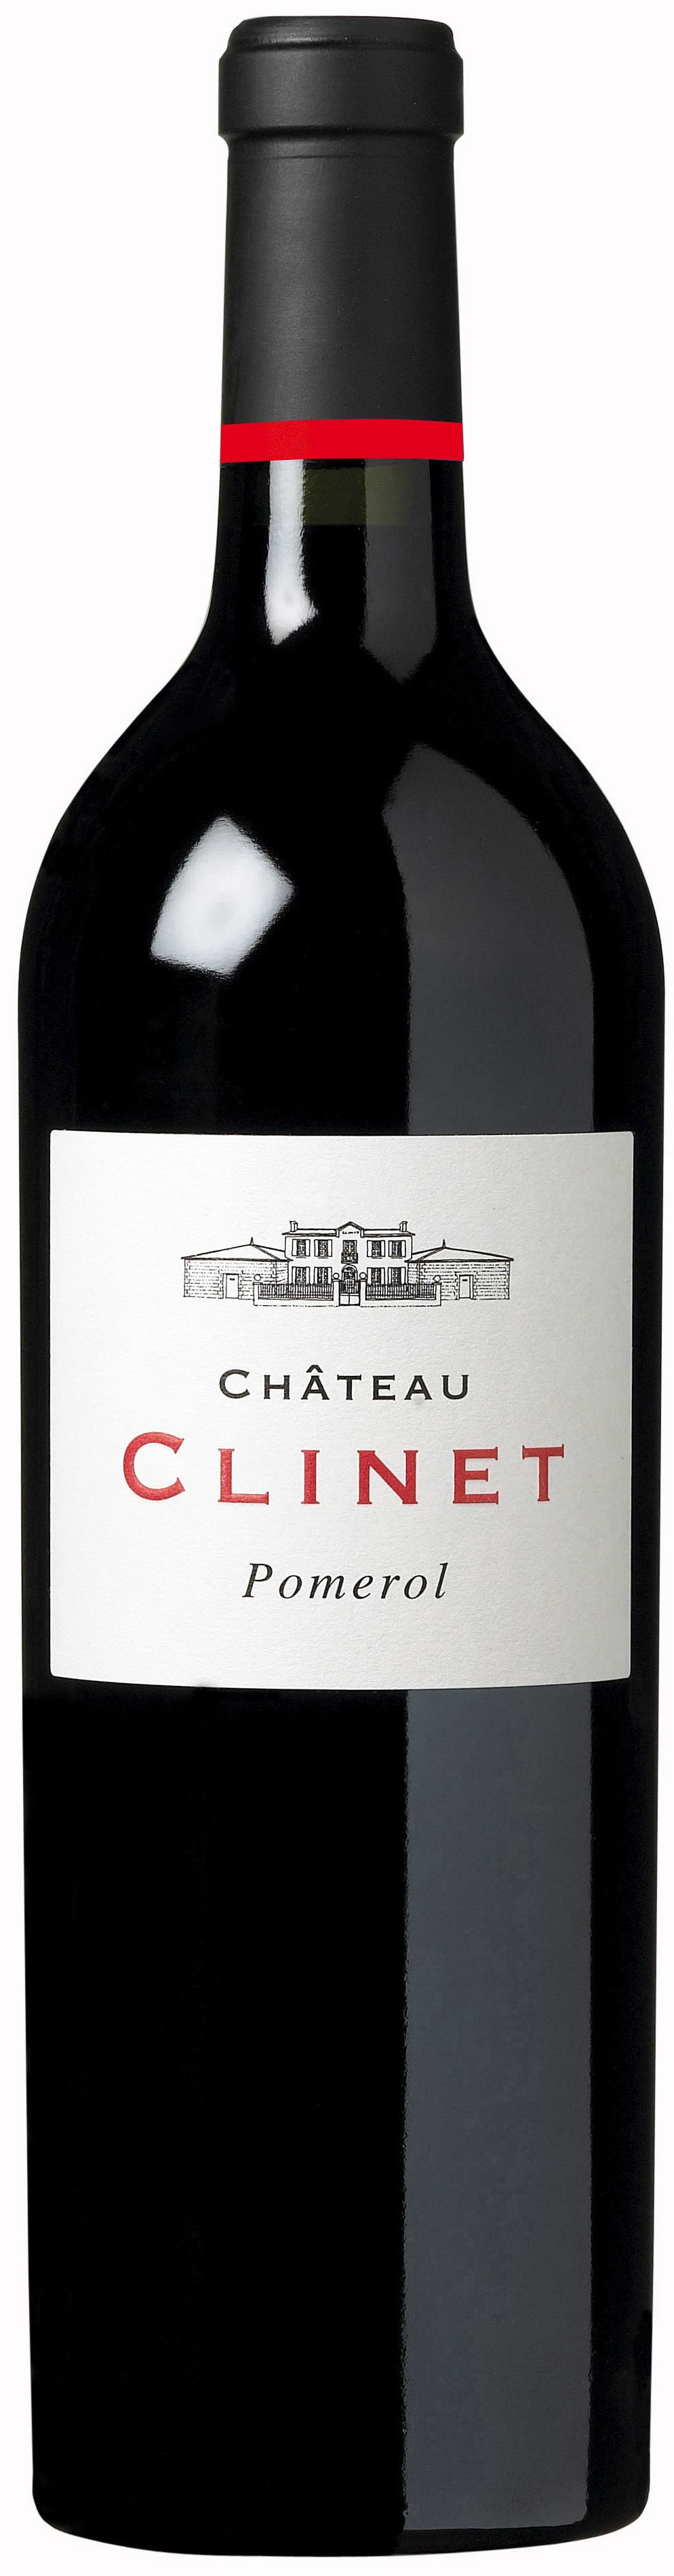 Chateau Clinet, 2011